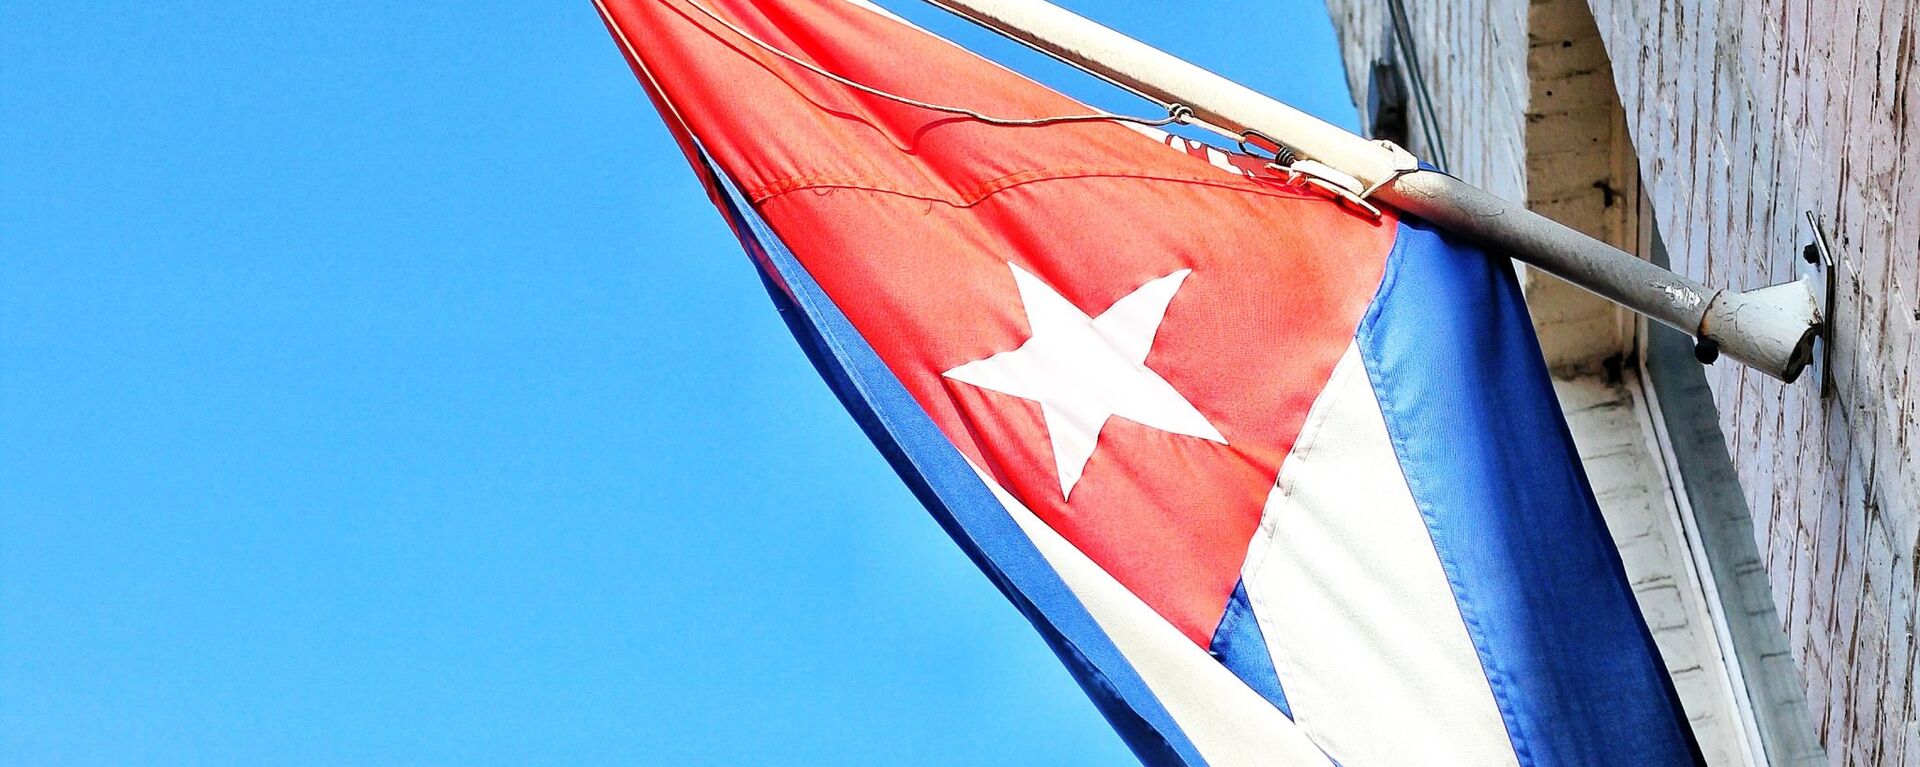 La bandera de Cuba - Sputnik Mundo, 1920, 26.01.2021